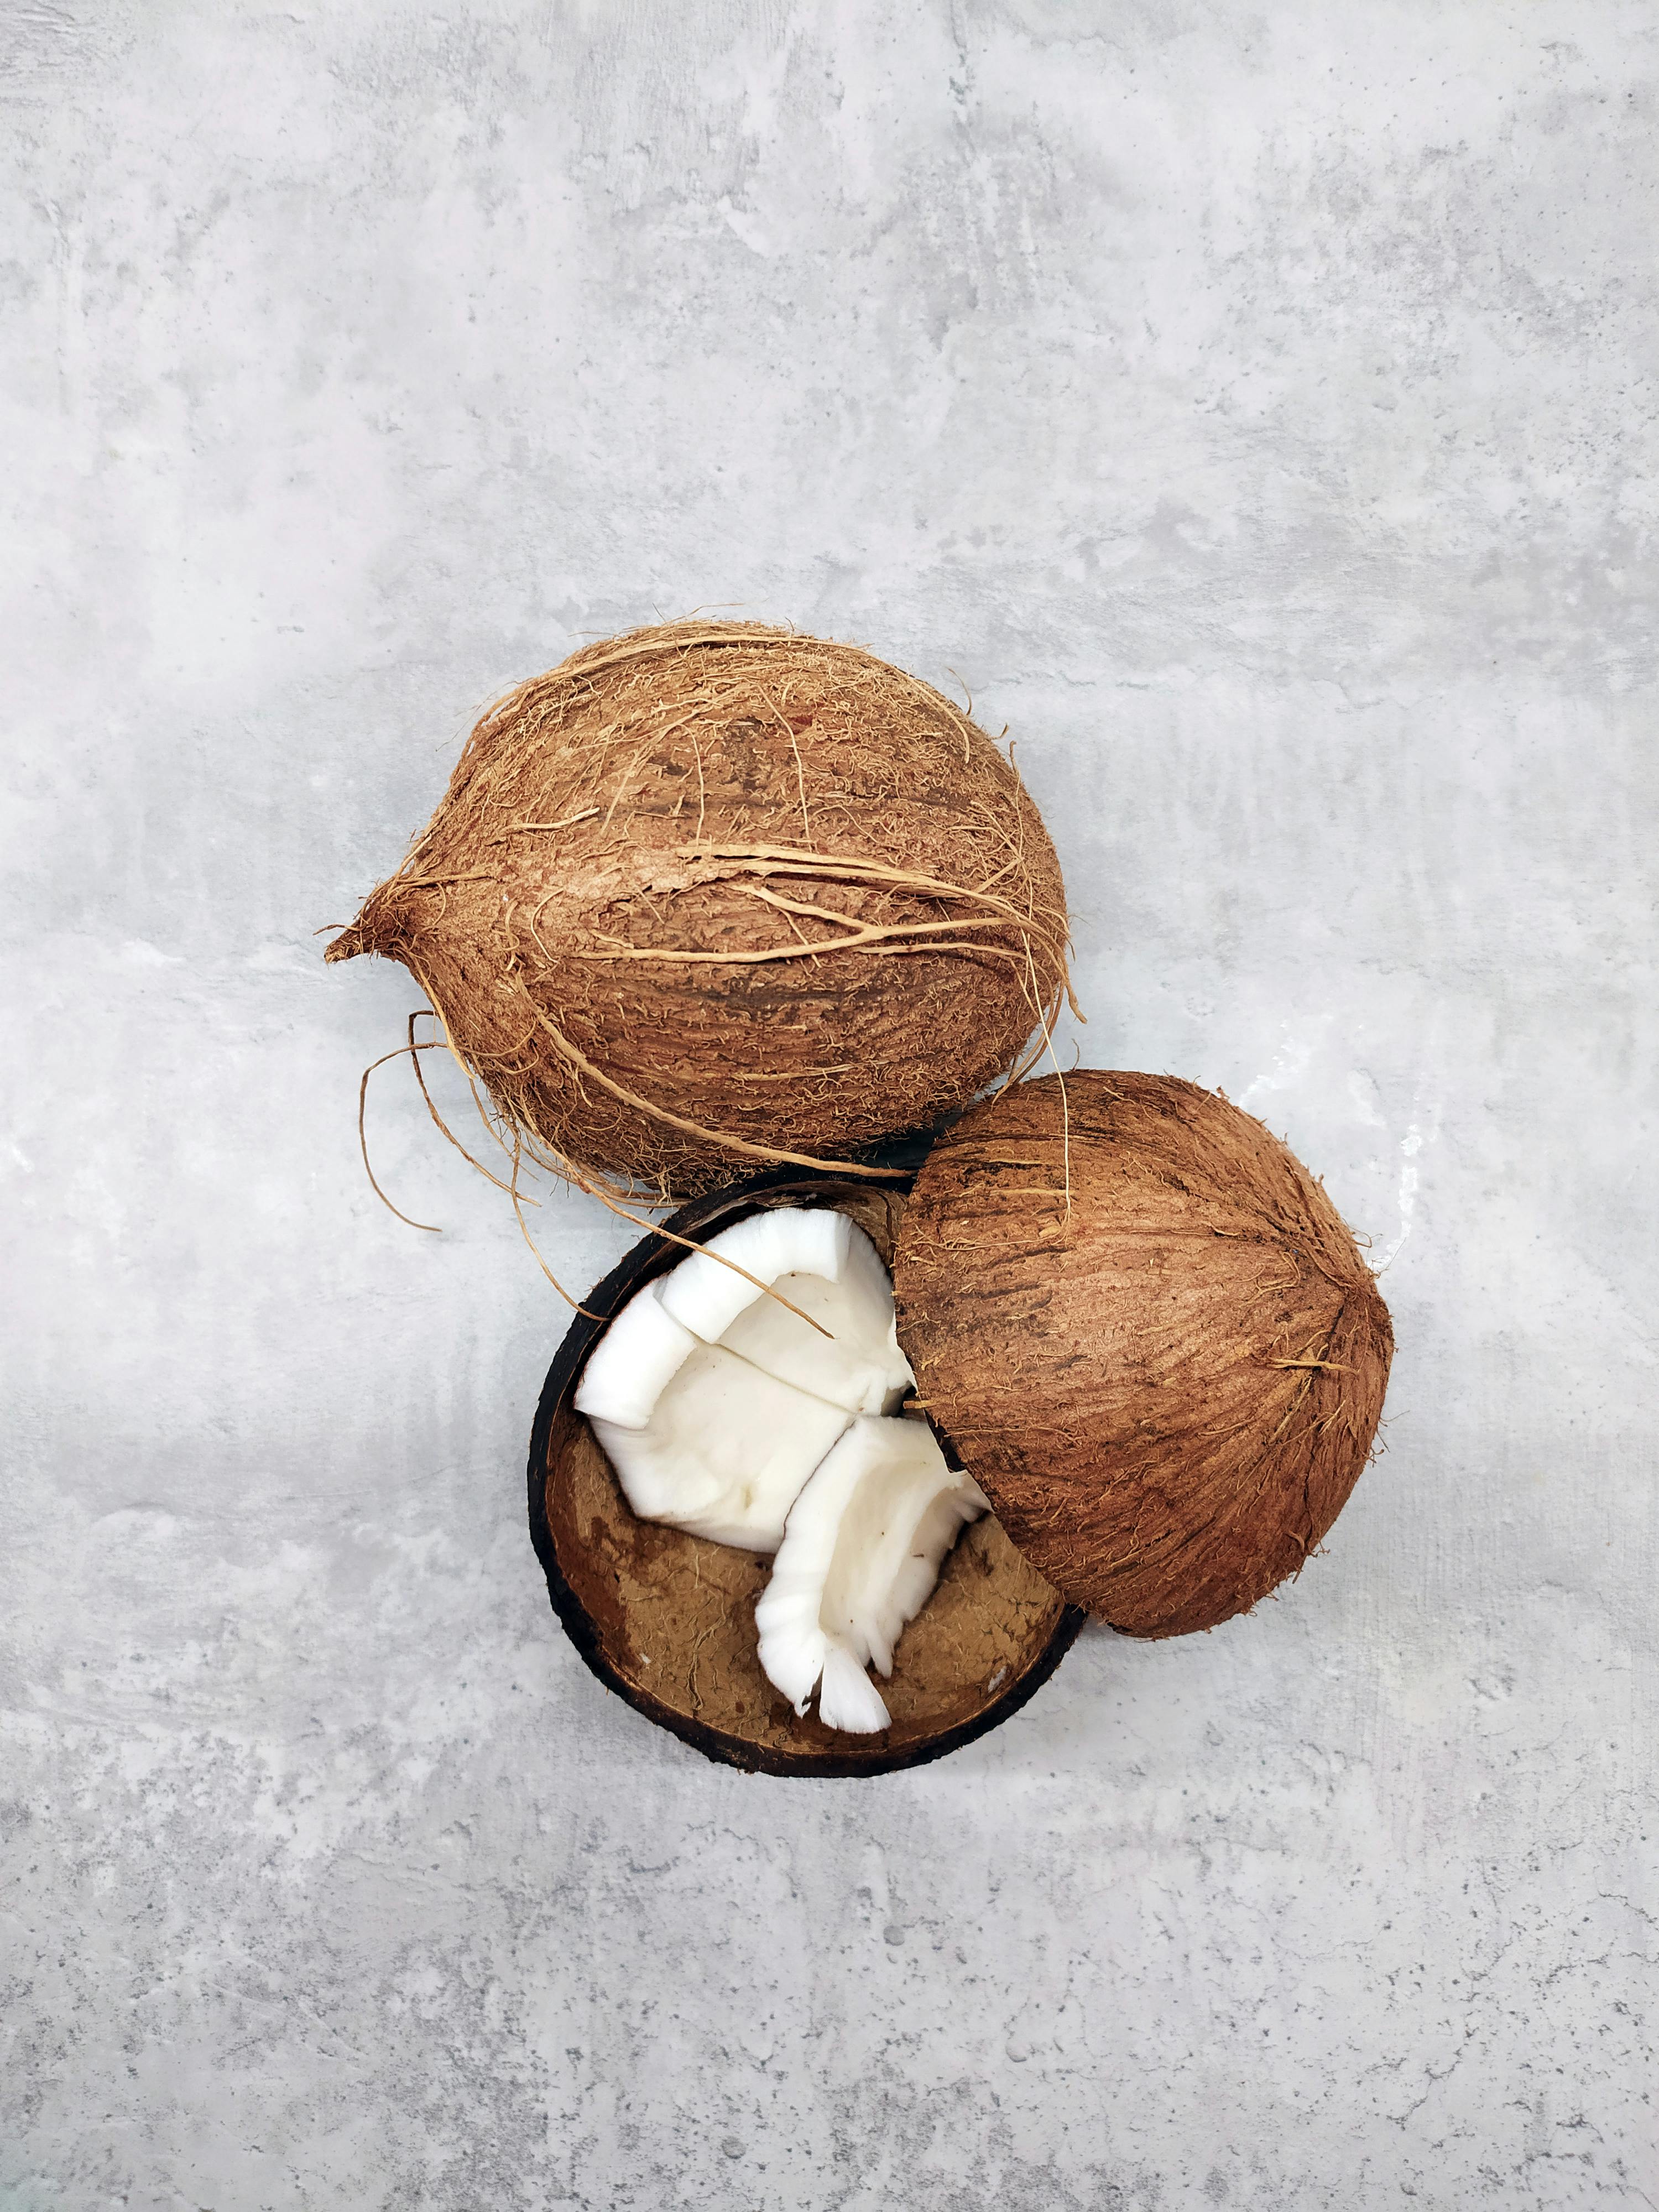 1000 Free Coconut Tree  Coconut Images  Pixabay